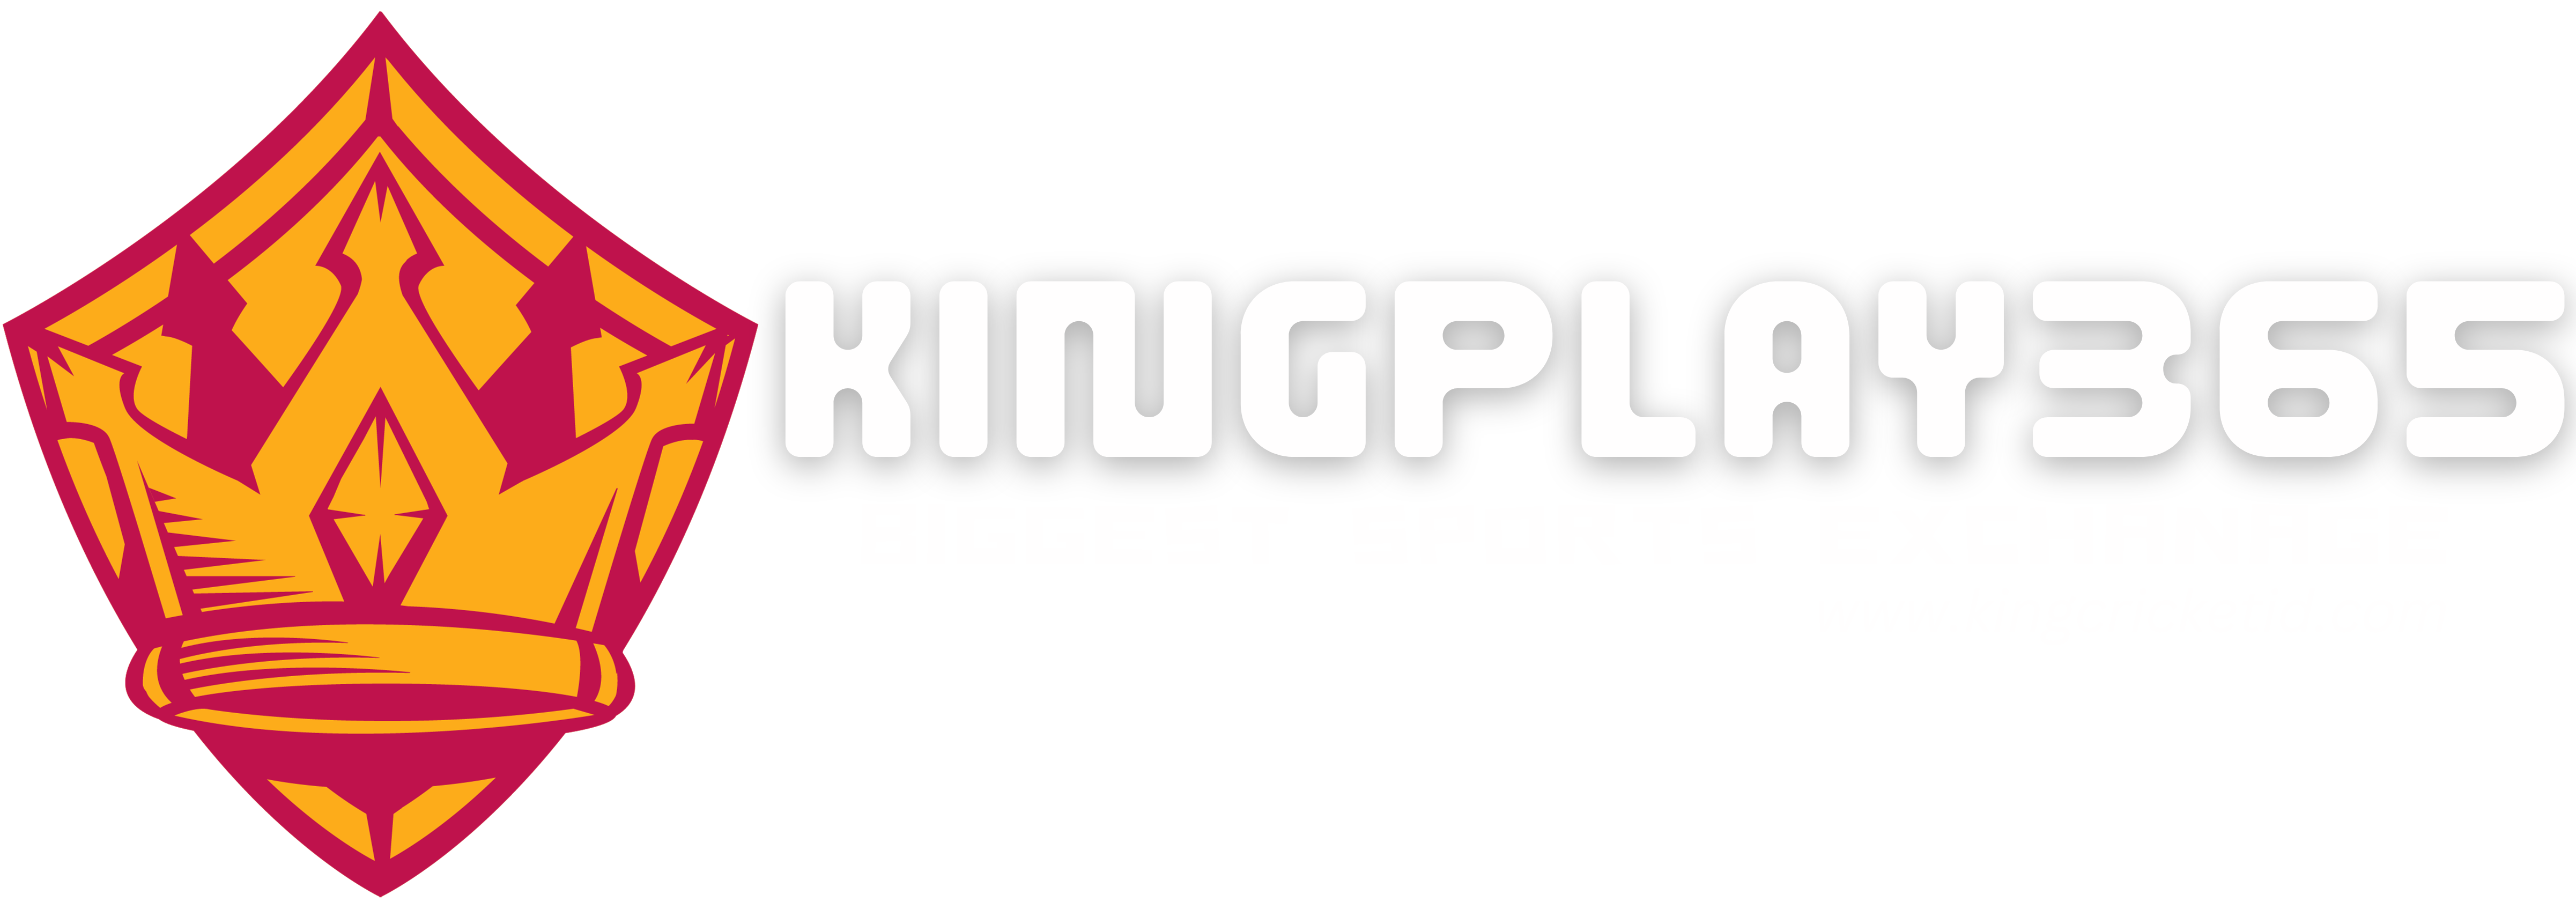 kingplay365.COM